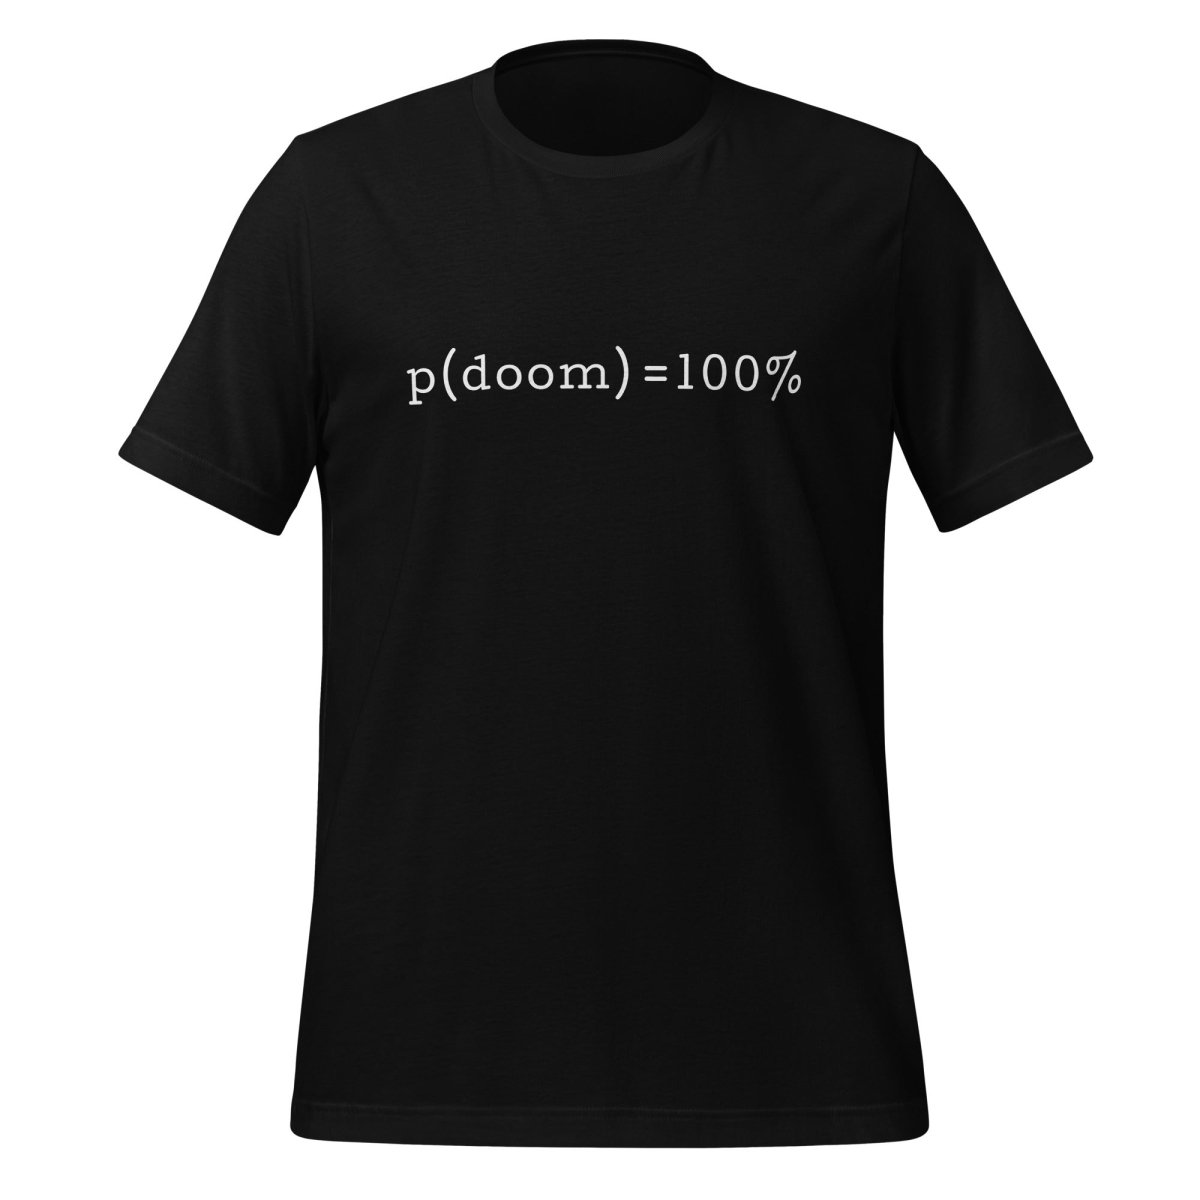 p(doom) = 100% T - Shirt (unisex) - Black - AI Store